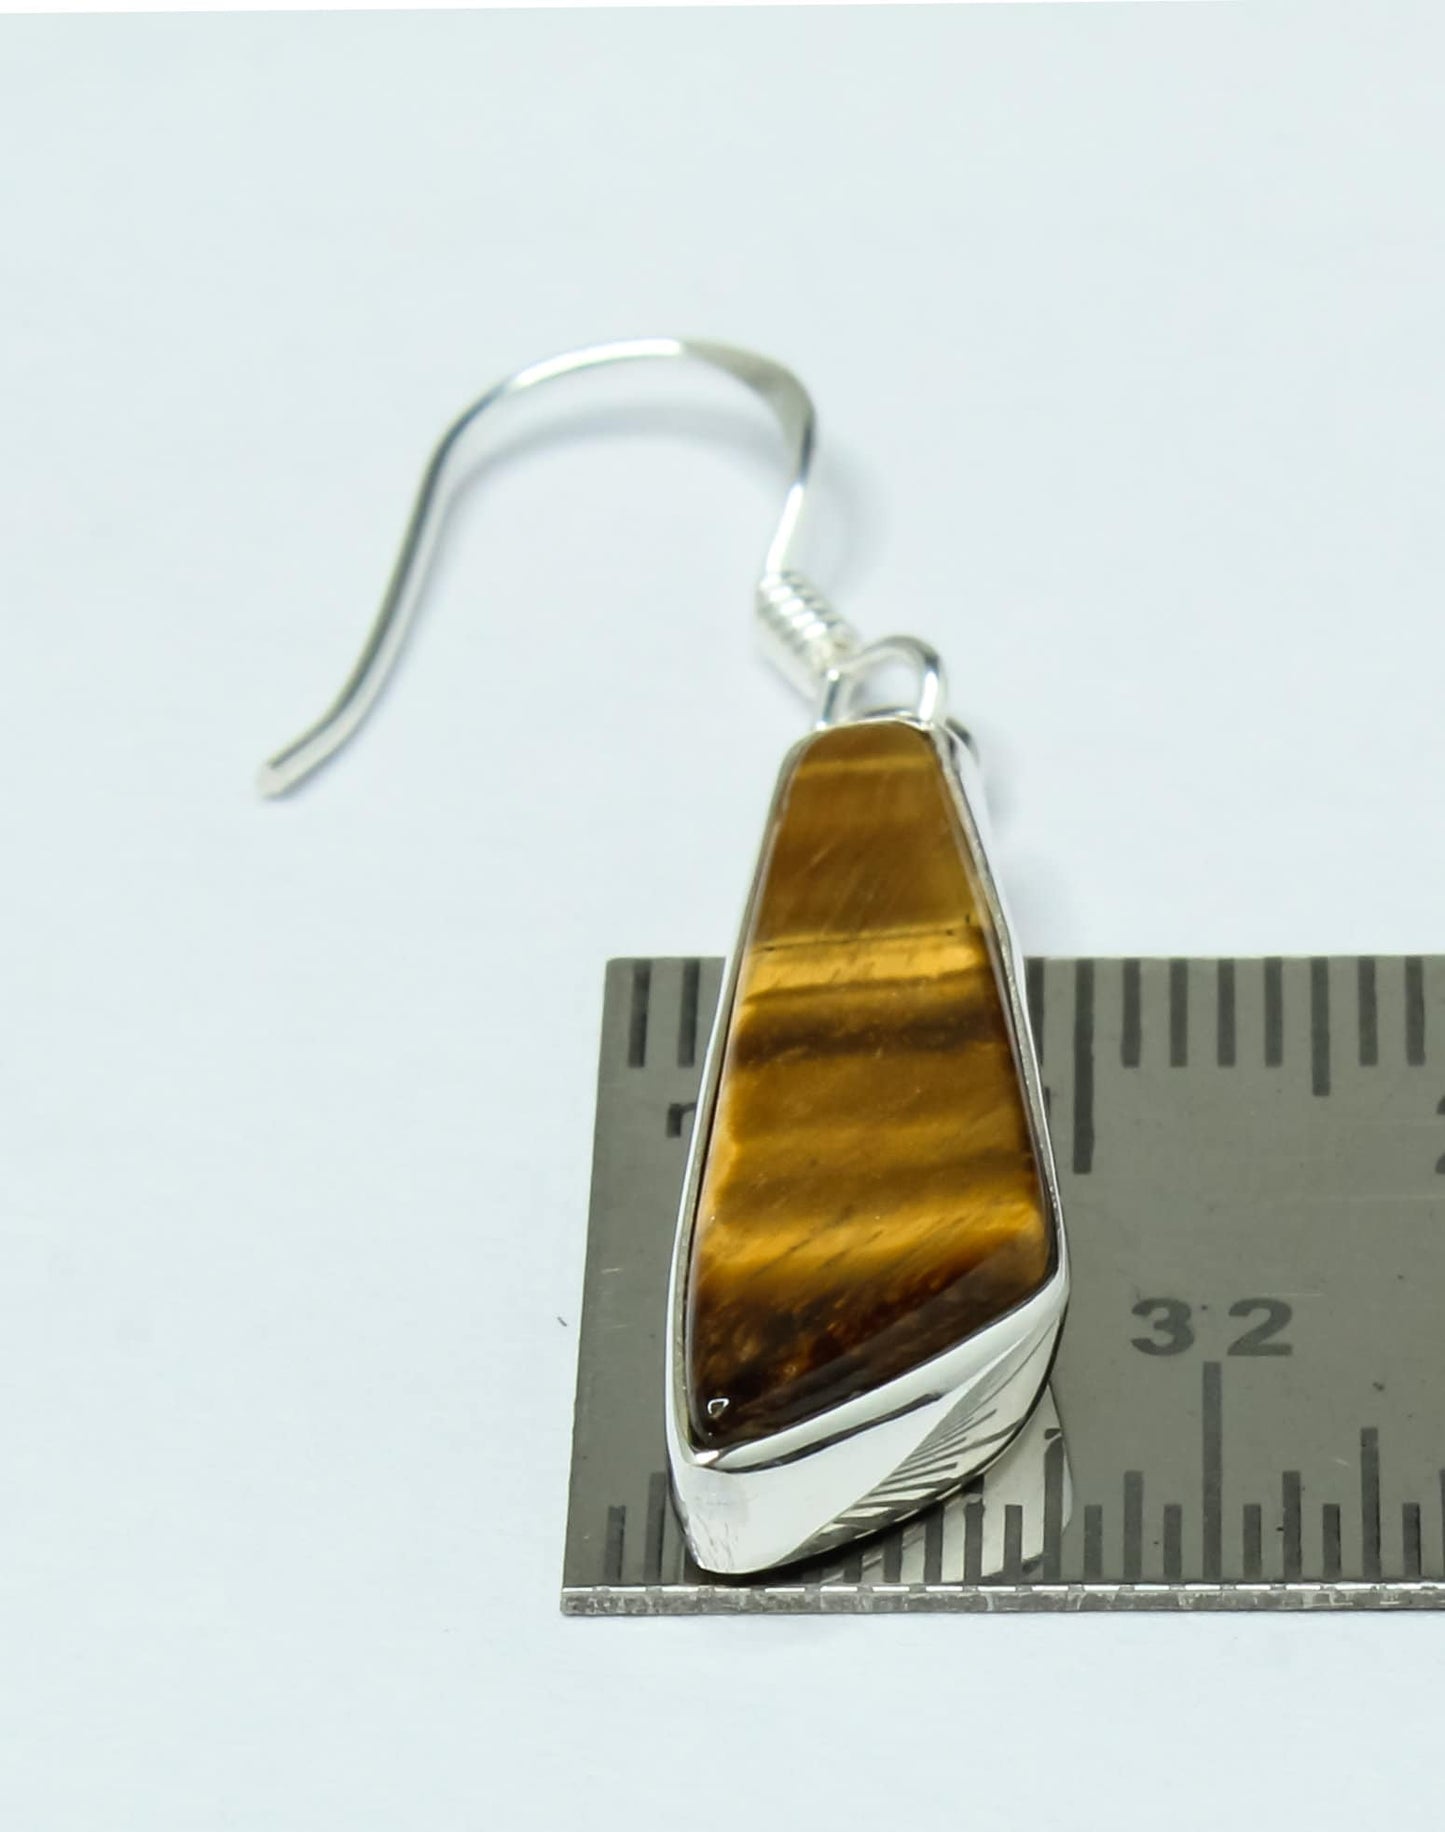 Quadrilateral TIGER'S EYE Gemstones 925 Sterling SILVER Drop Earrings